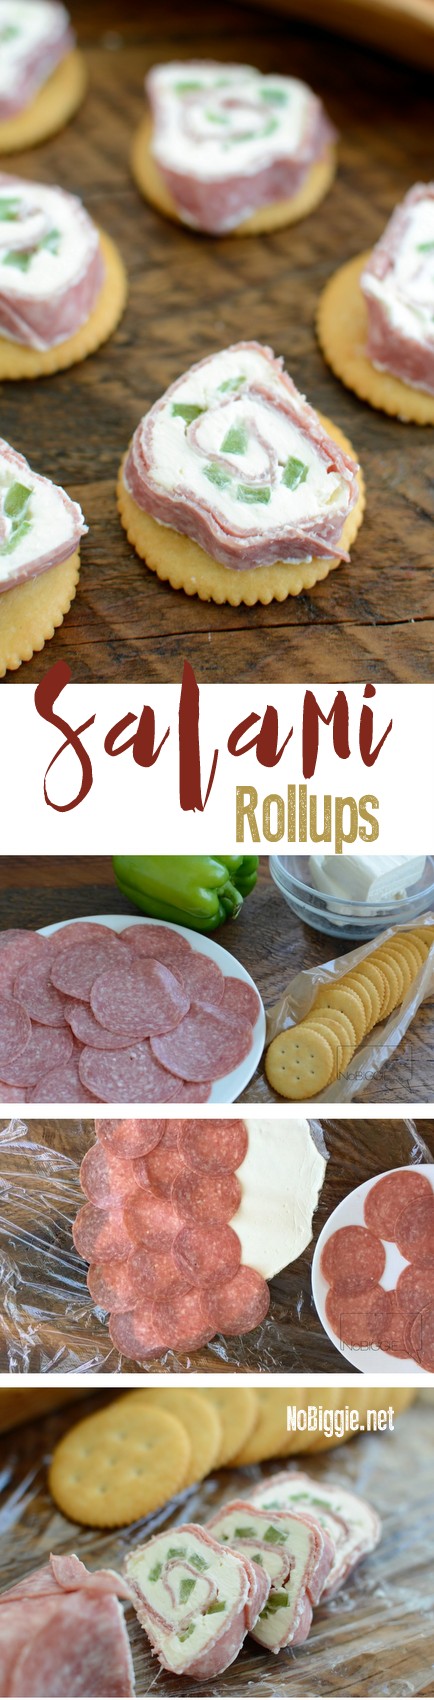 http://www.nobiggie.net/wp-content/uploads/2016/09/Salami-Rollups-Easy-Appetizer.jpg